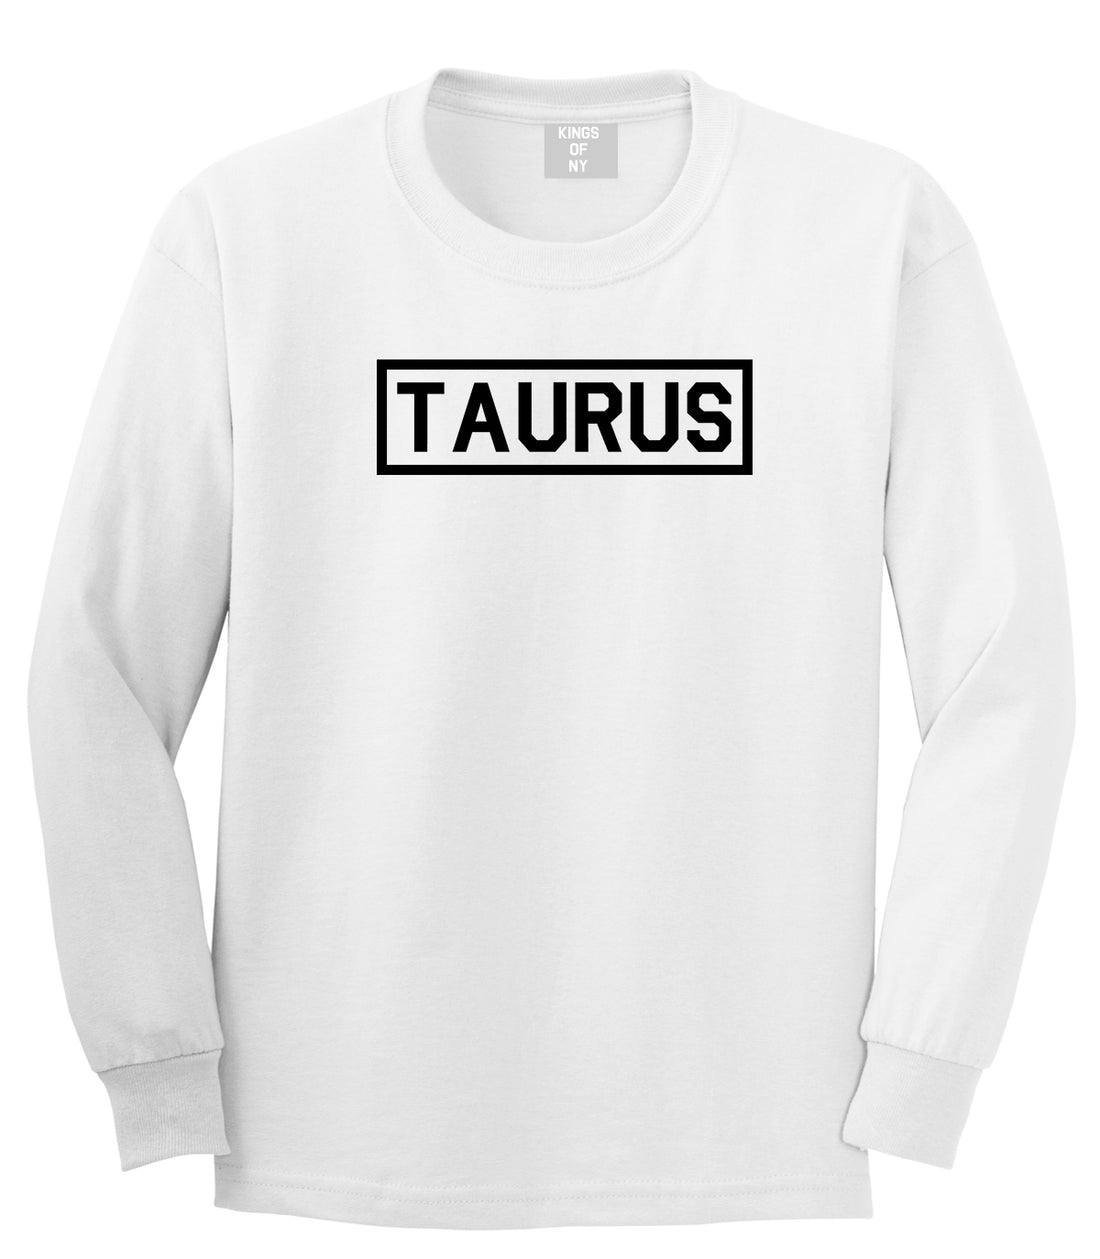 Taurus Horoscope Sign Mens White Long Sleeve T-Shirt by KINGS OF NY